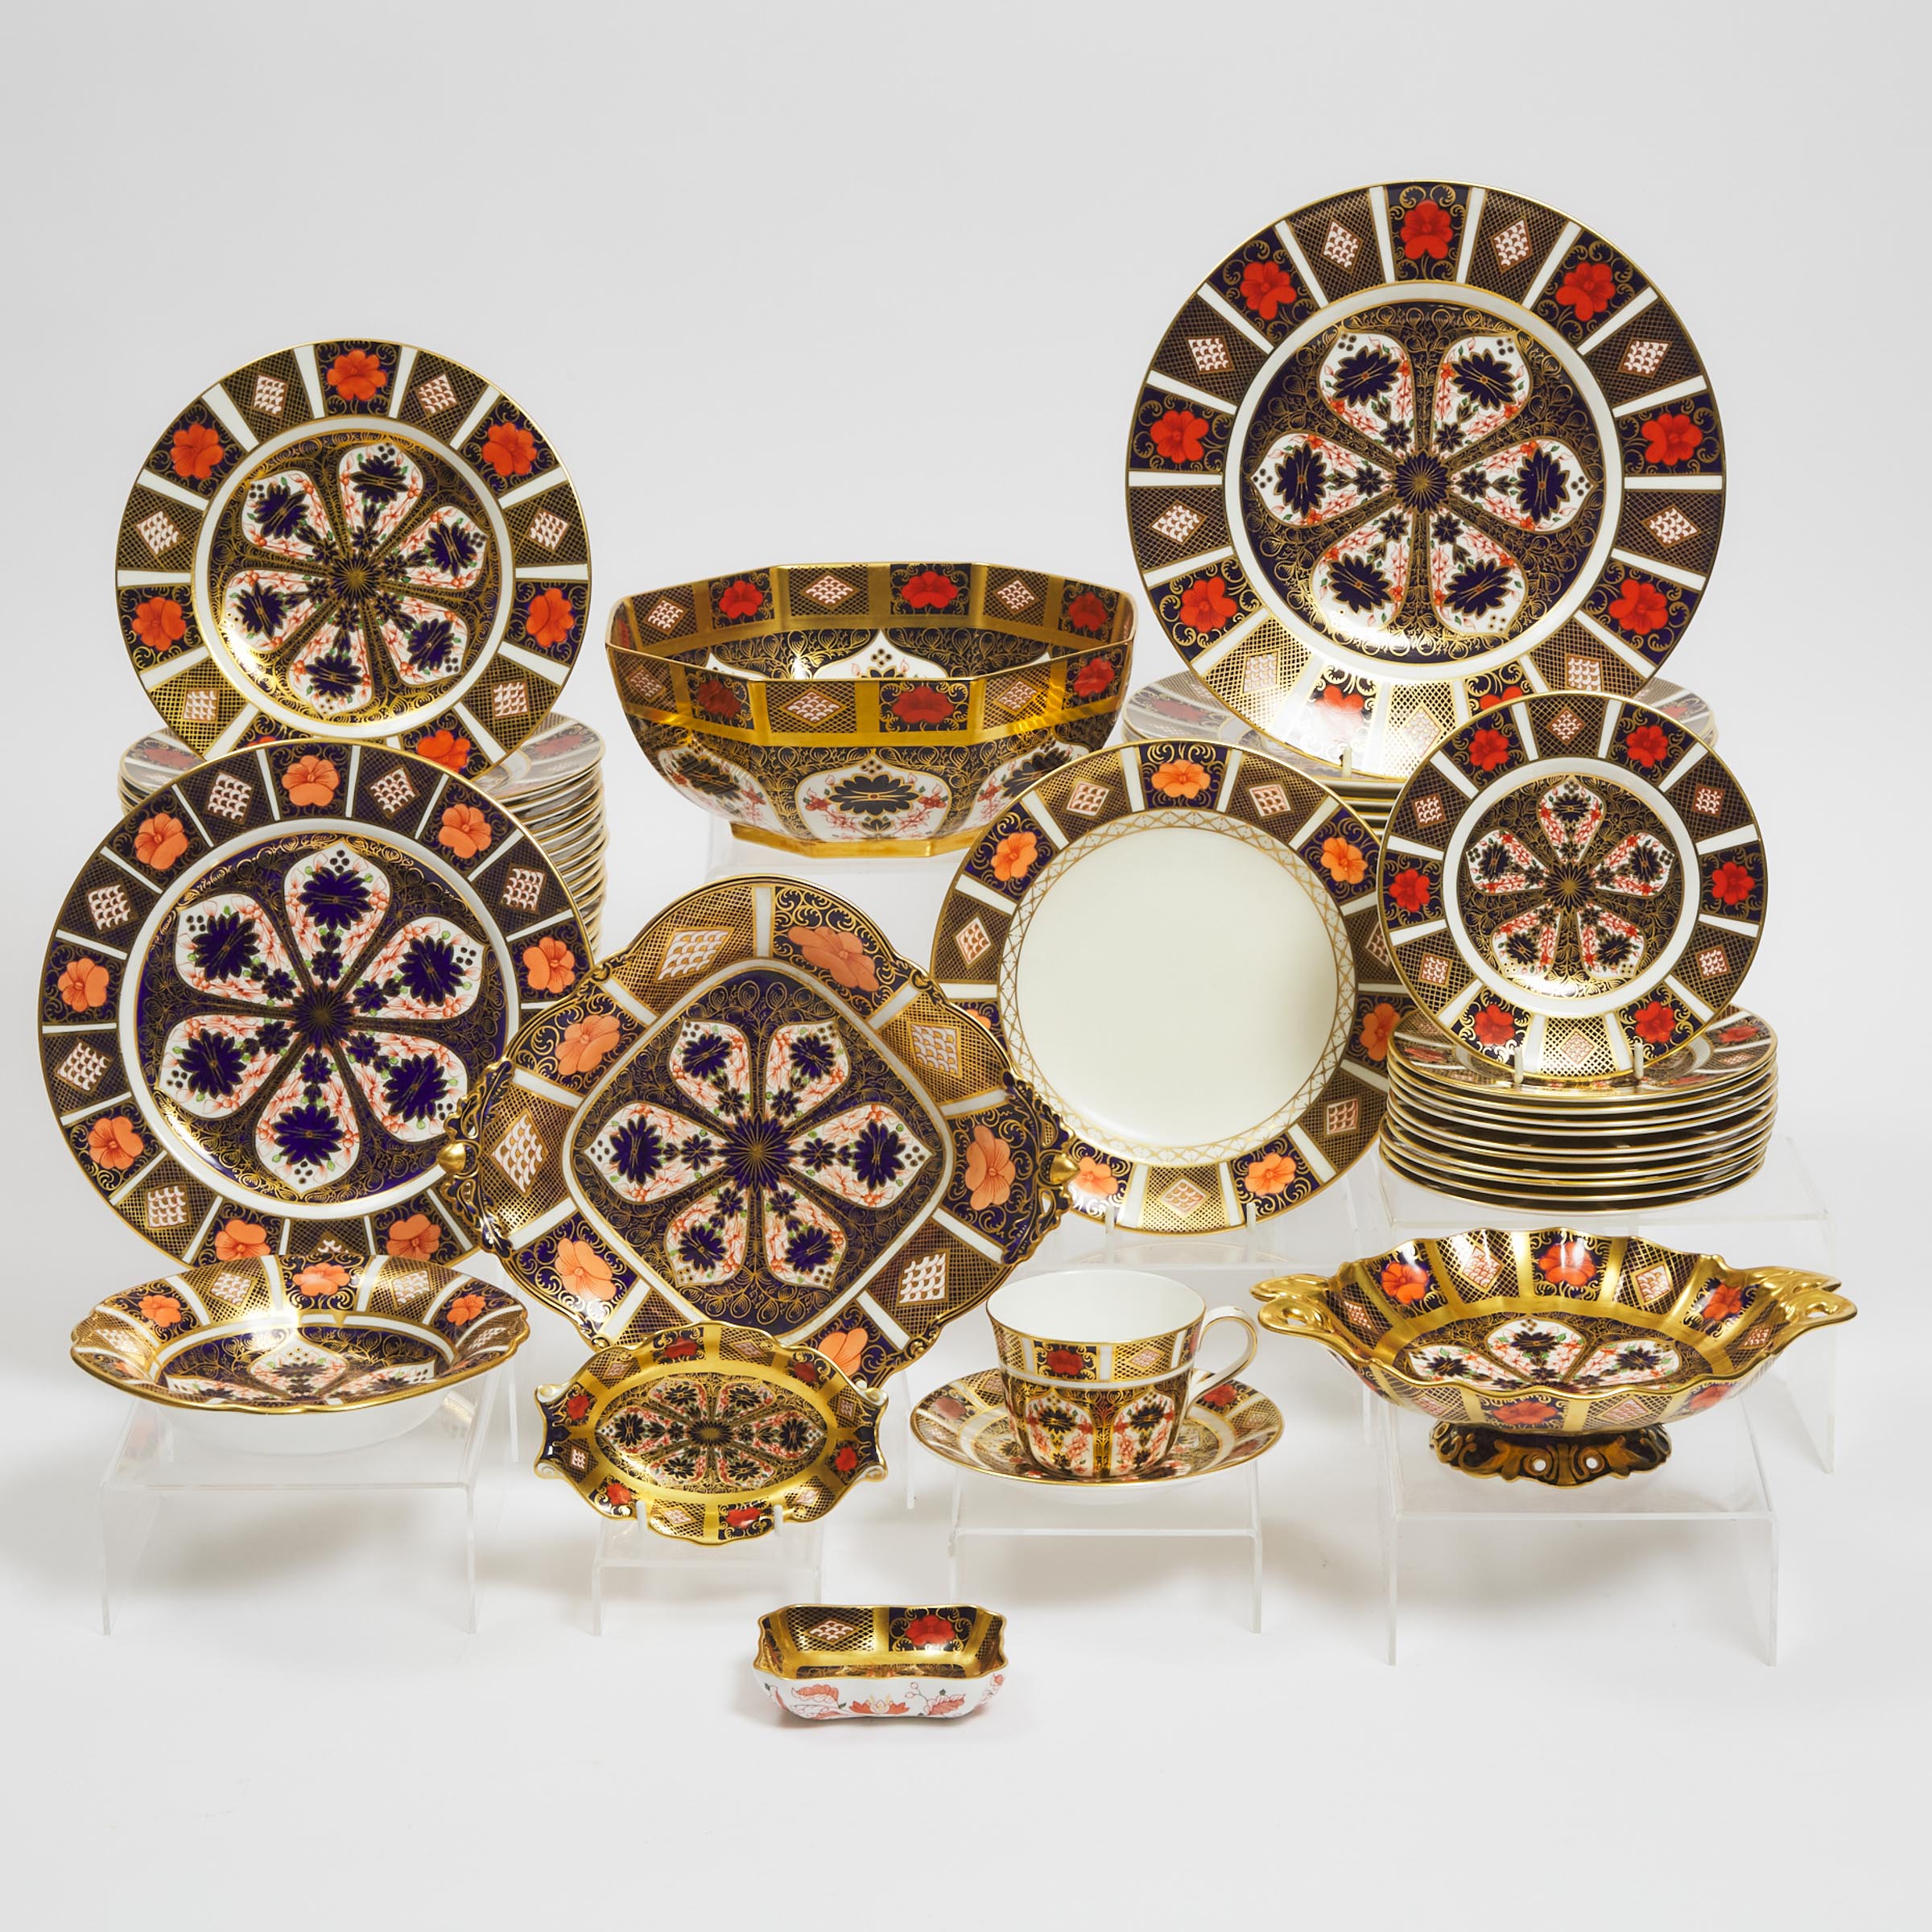 Royal Crown Derby 'Old Imari' (1128) Pattern Tablewares, 20th century